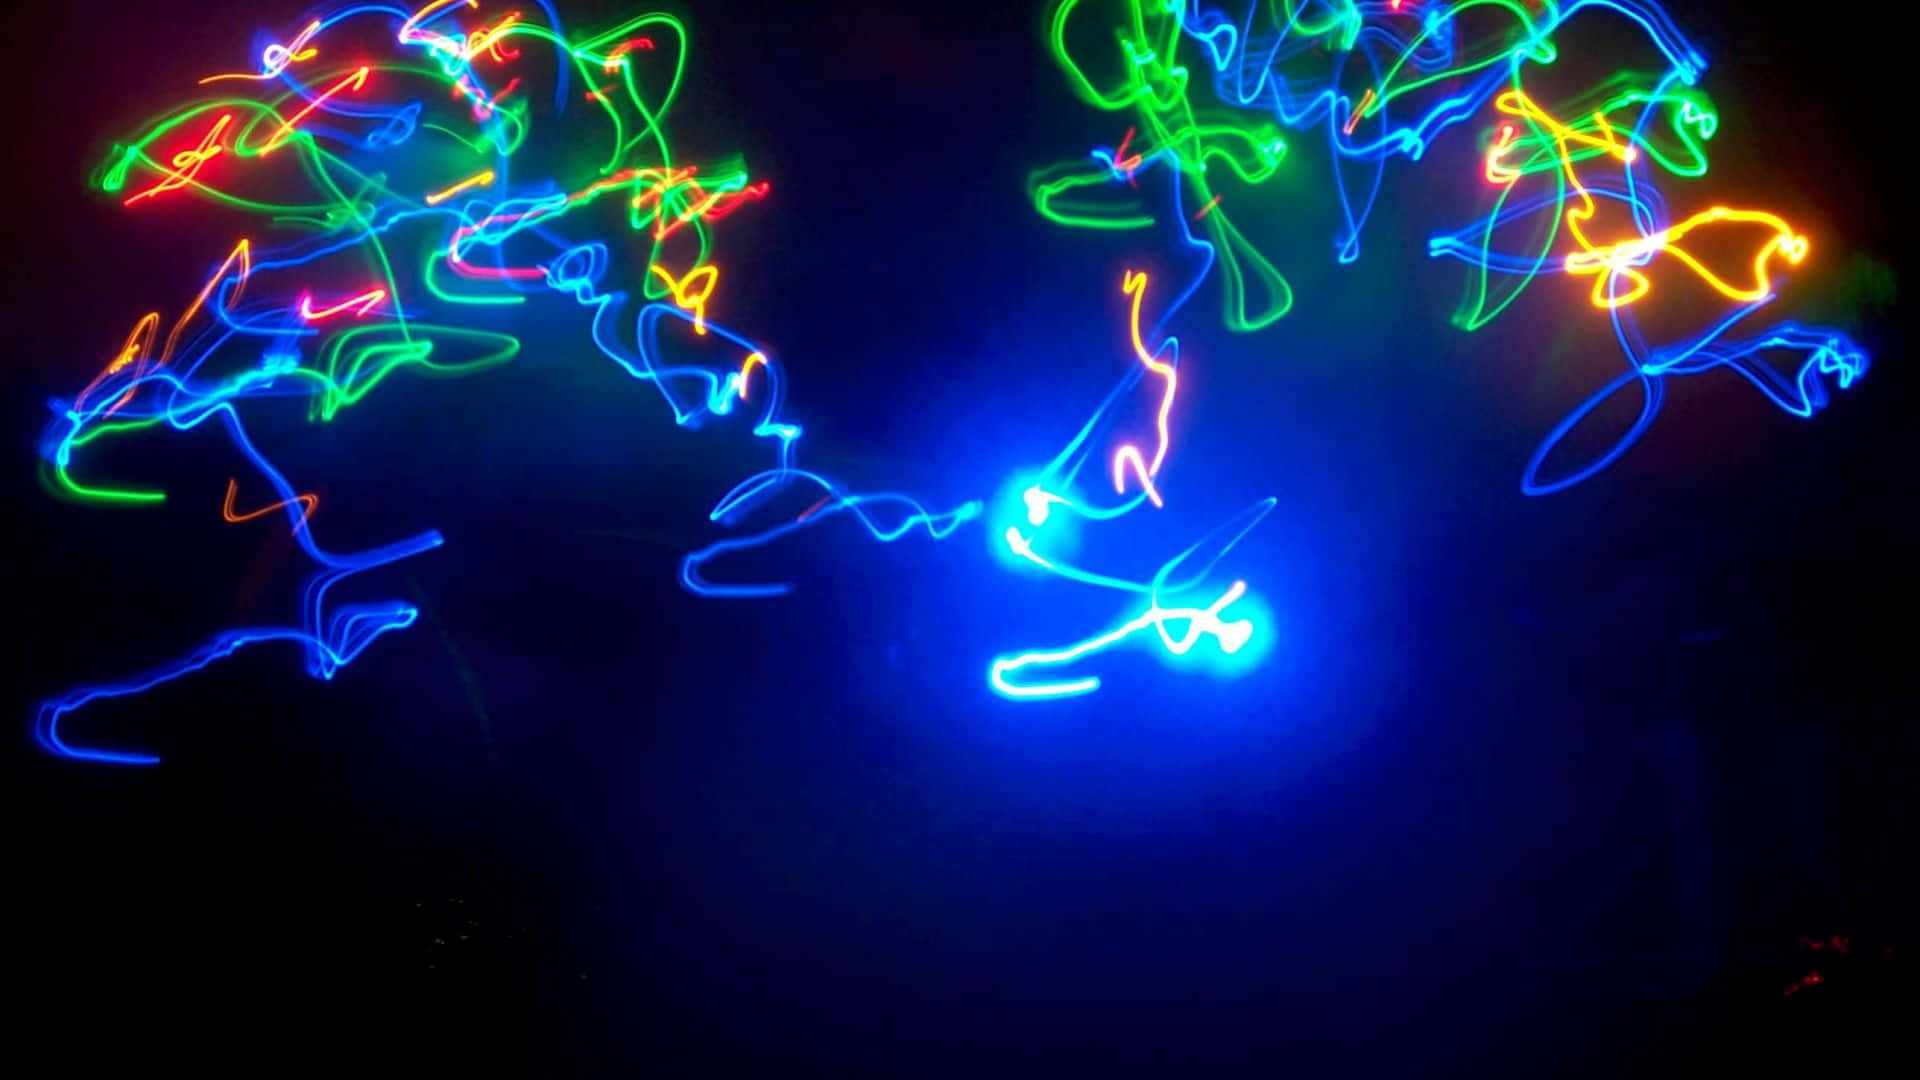 A mesmerizing swirl of colorful LED lights